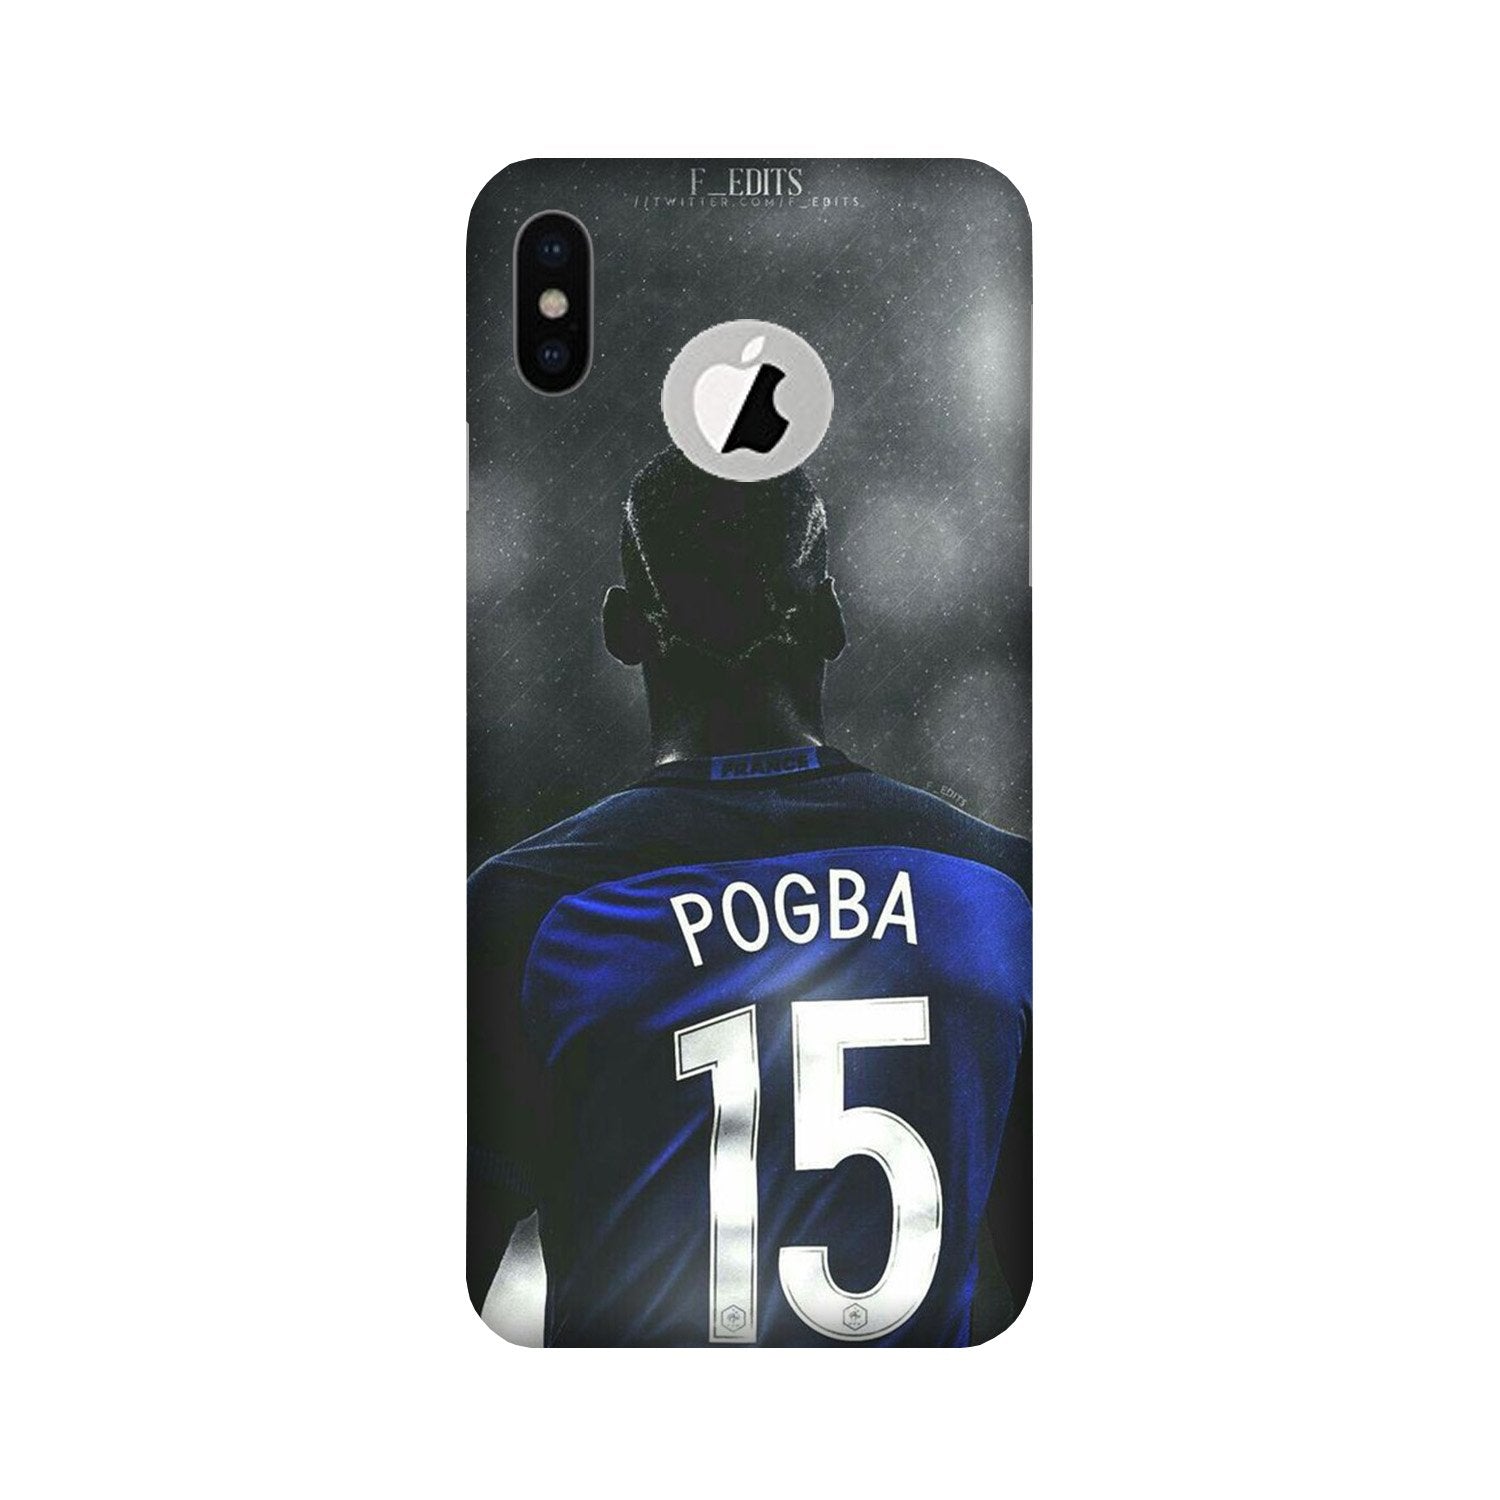 Pogba Case for iPhone X logo cut  (Design - 159)